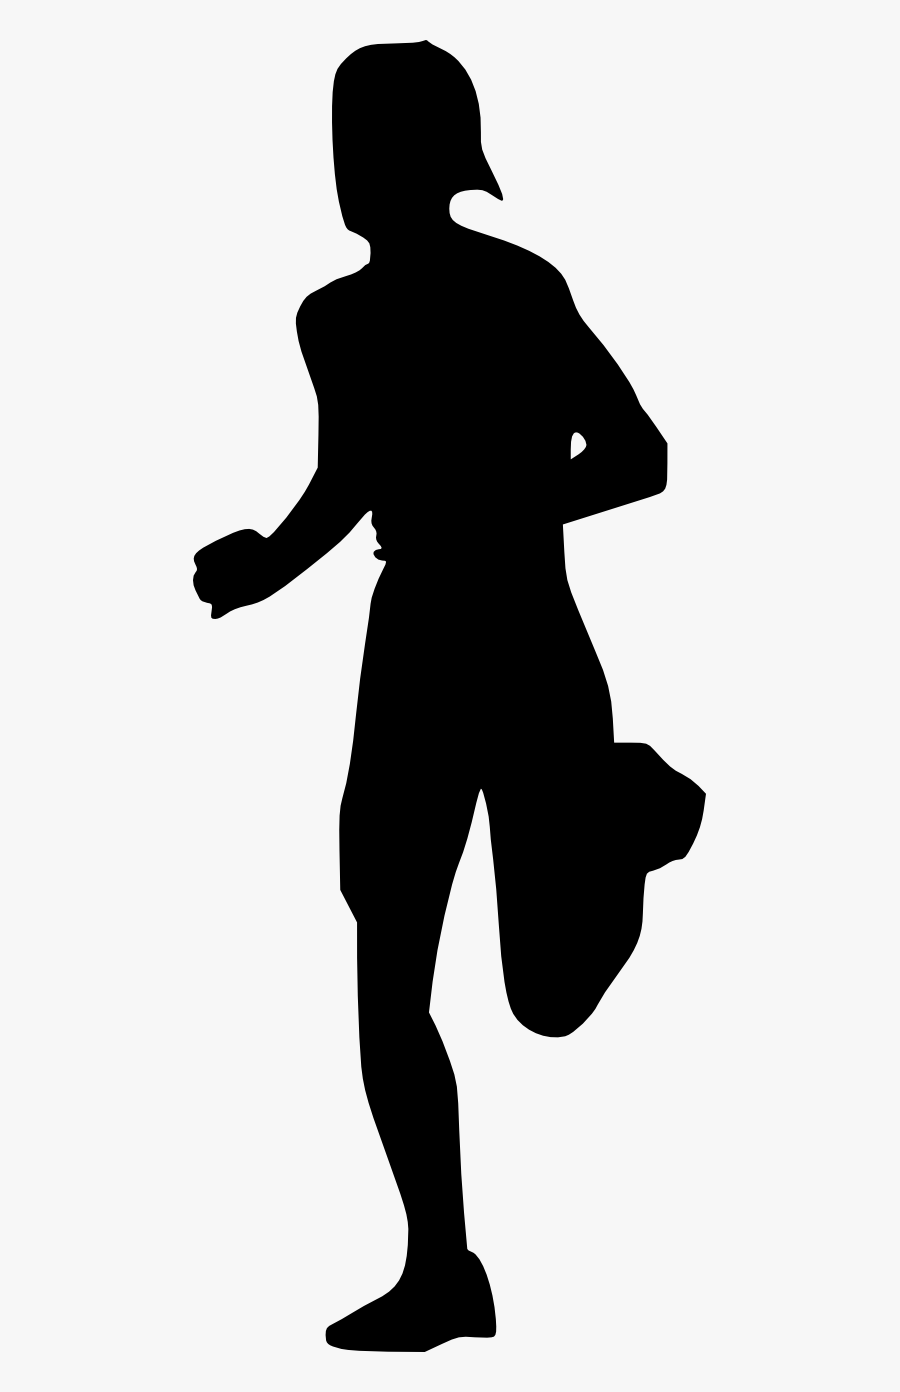 Man Running Silhouette - Running Man Silhouette Running Png, Transparent Clipart